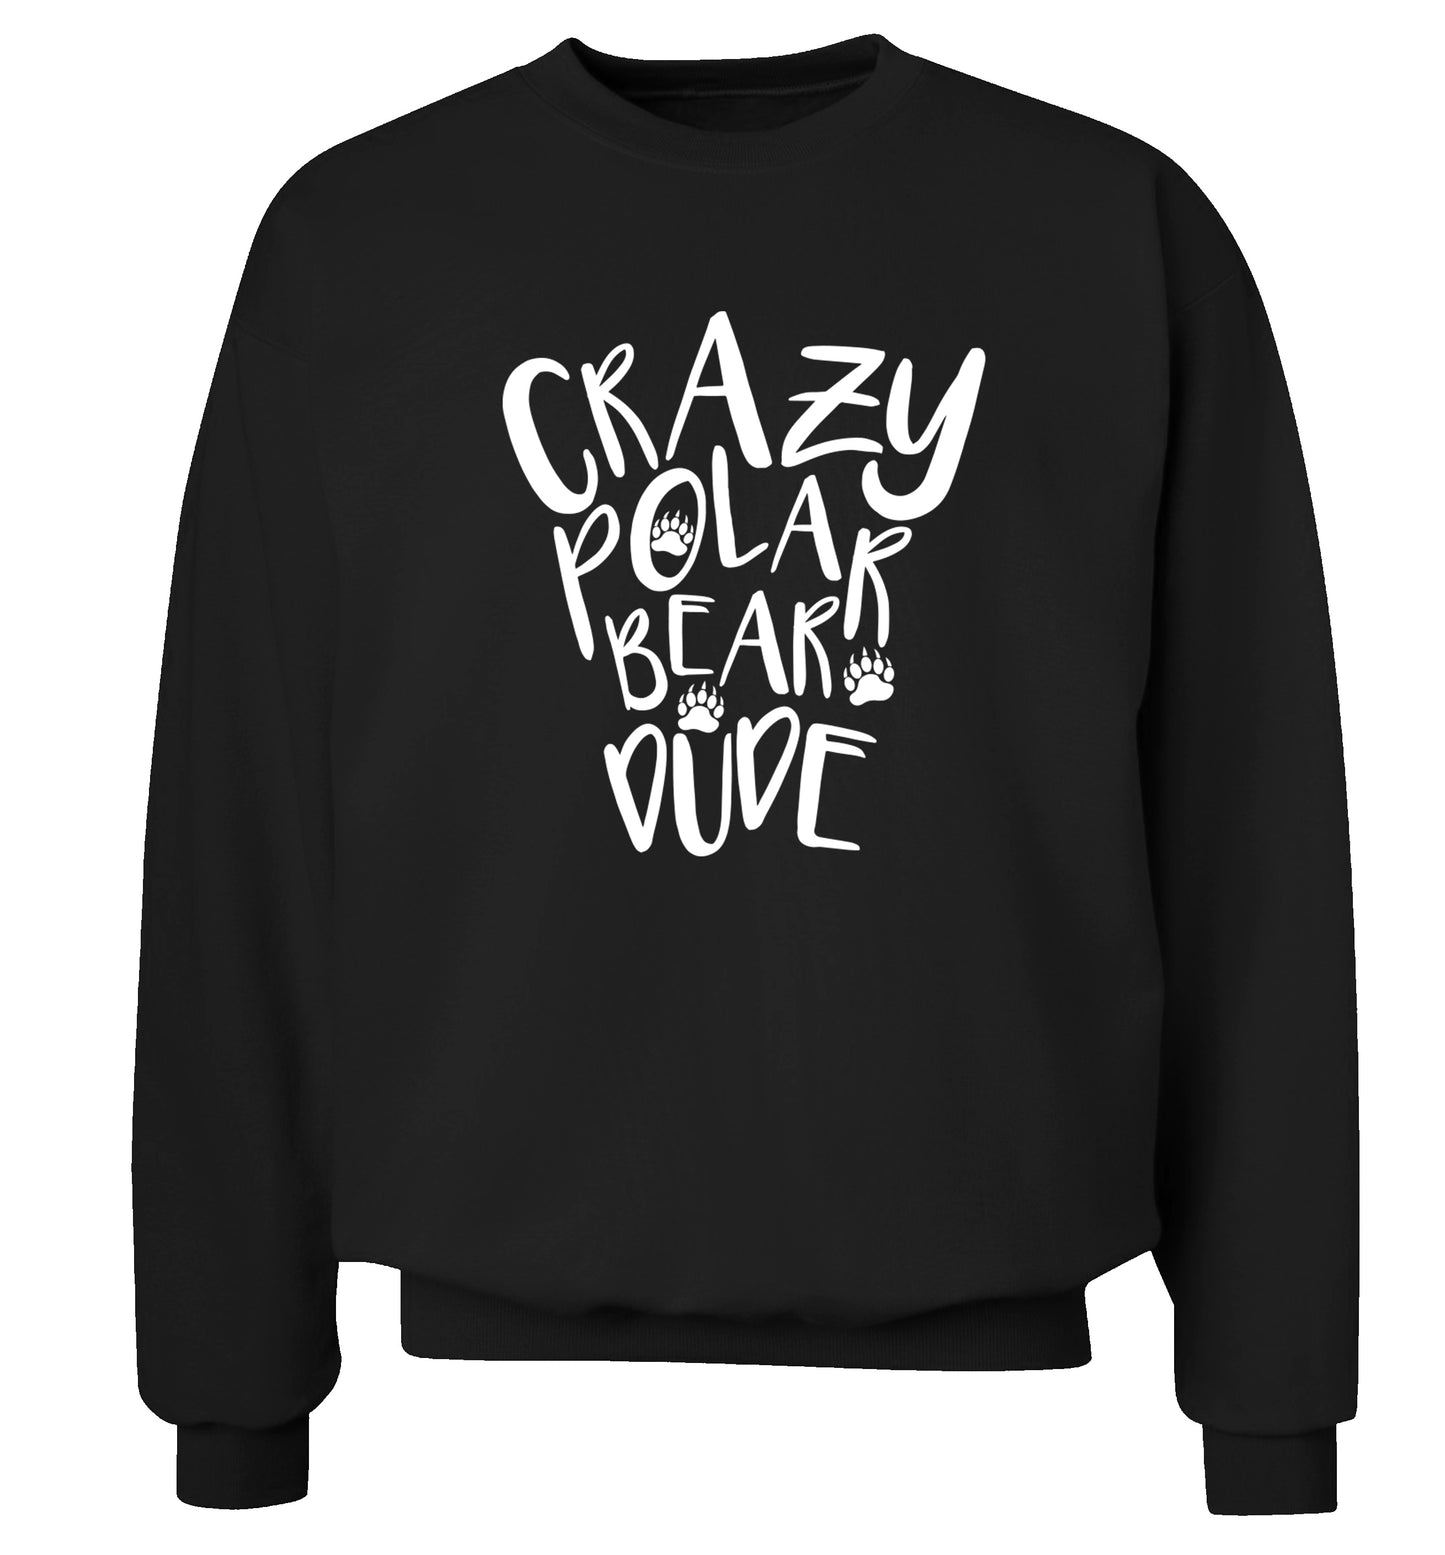 Crazy polar bear dude Adult's unisex black Sweater 2XL